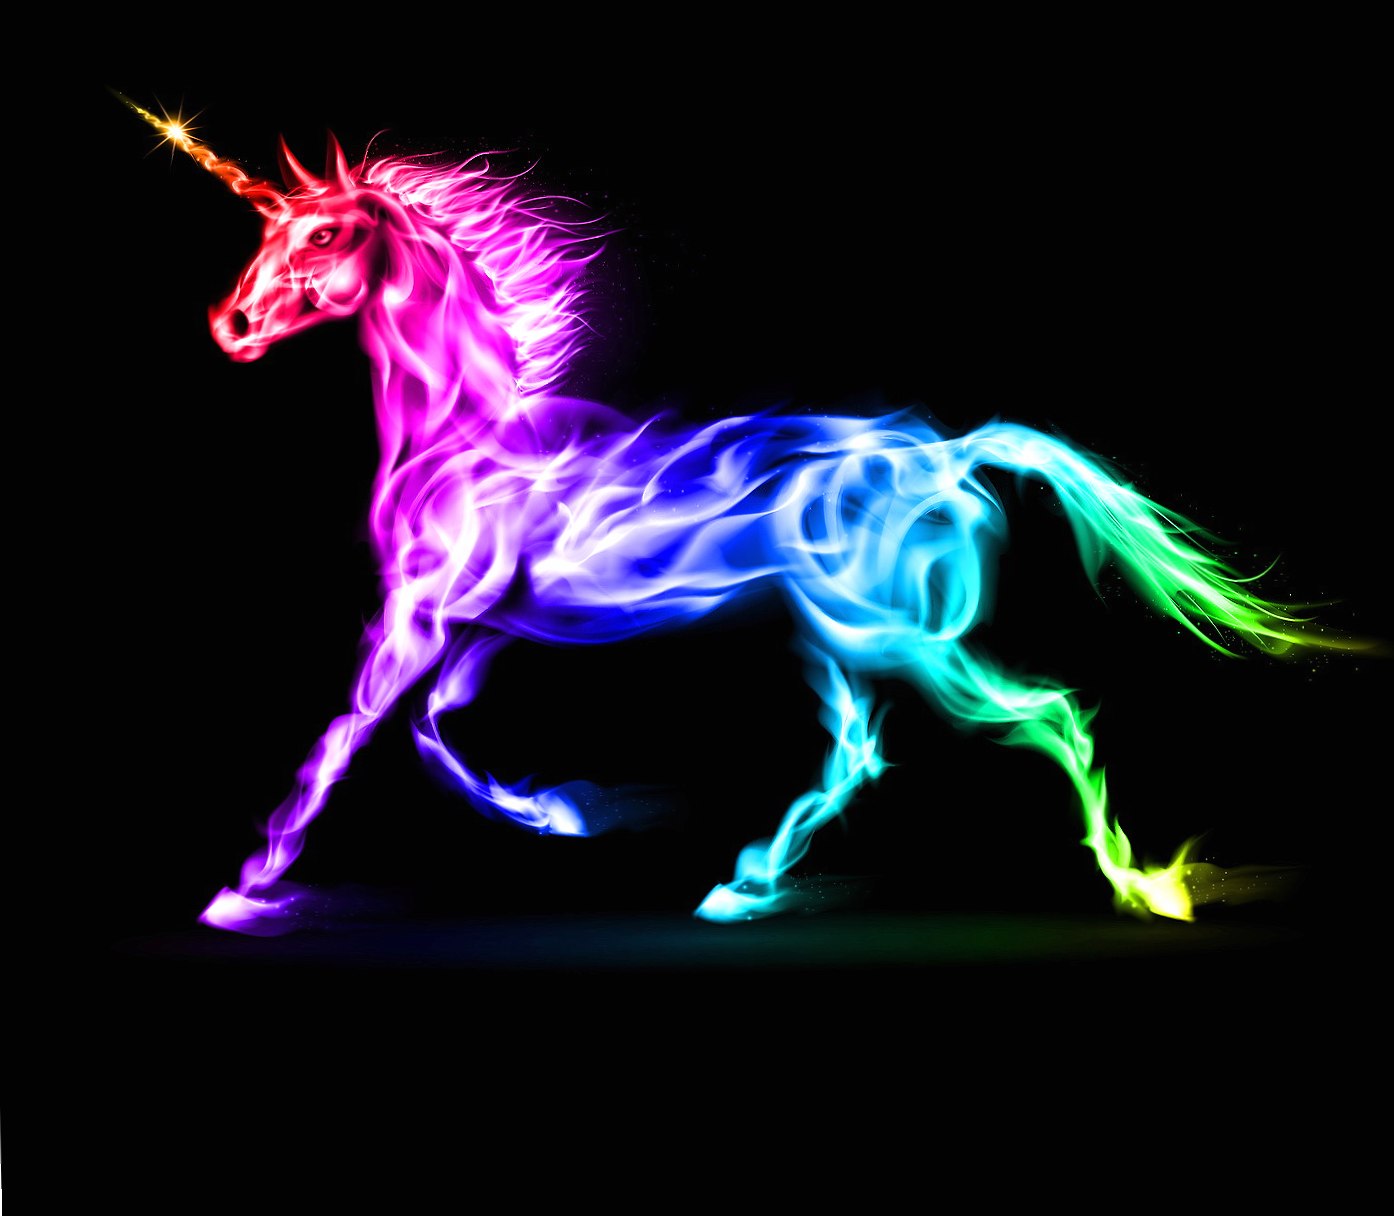 Rainbow Unicorn at 1024 x 1024 iPad size wallpapers HD quality